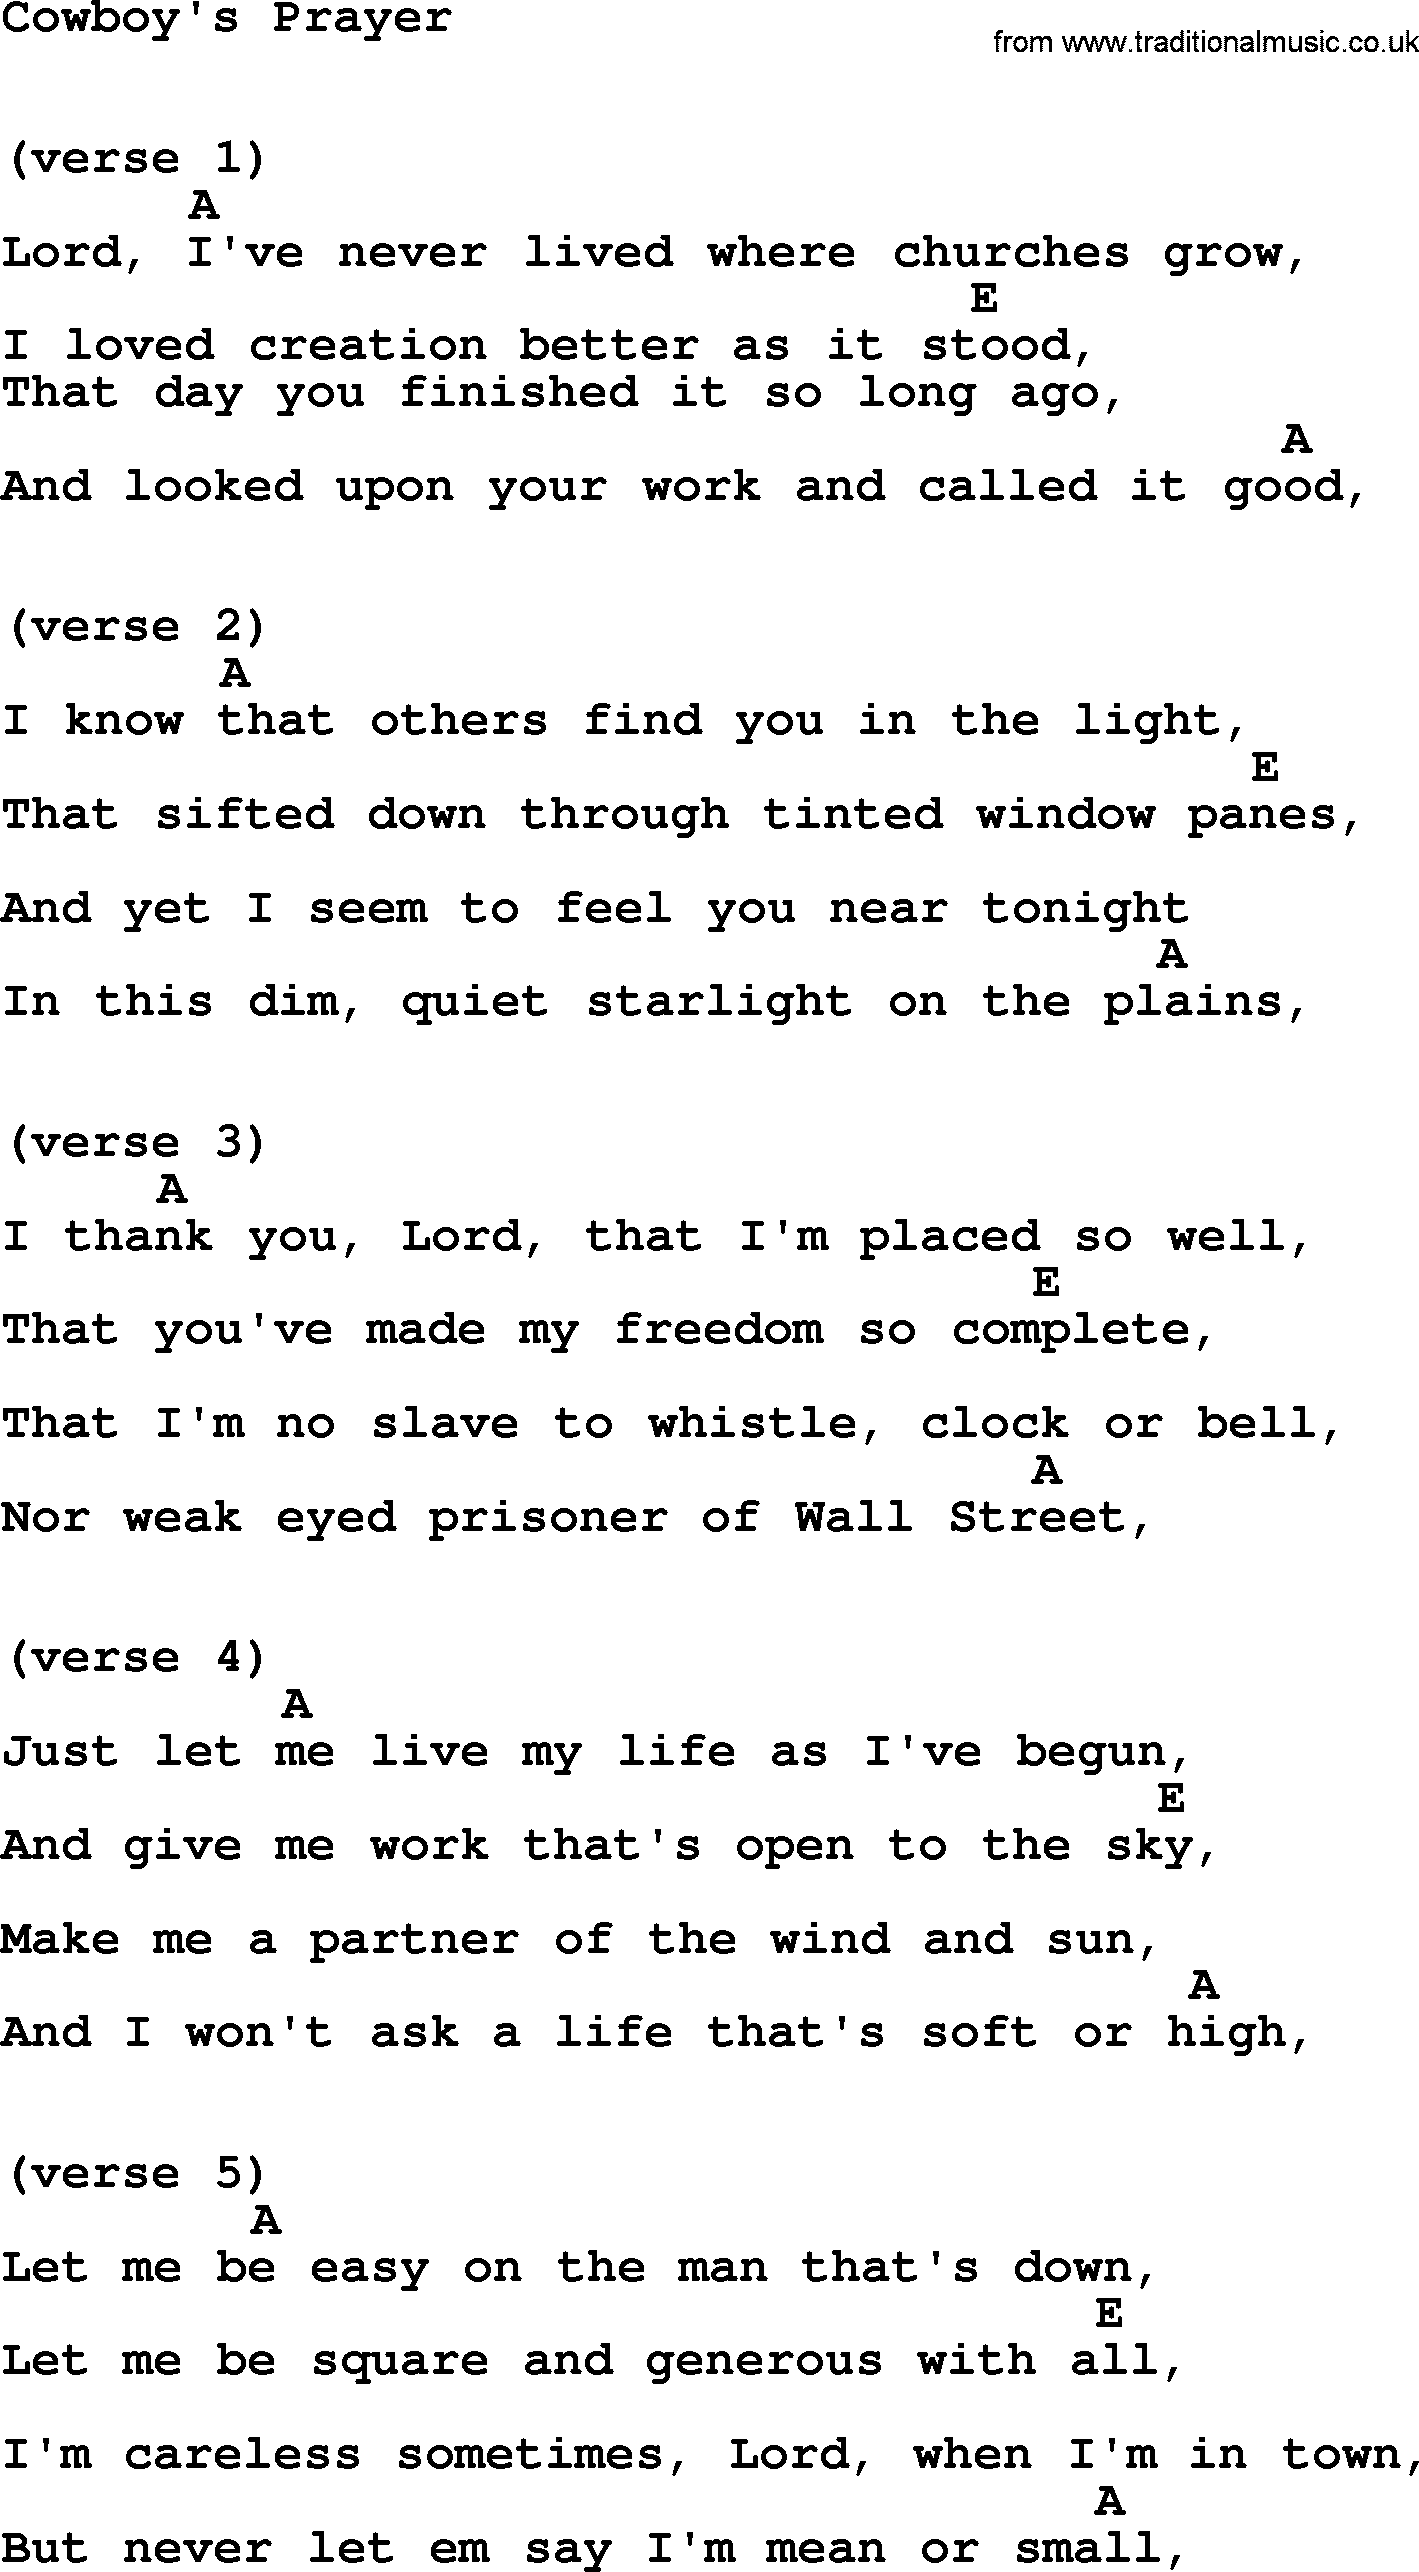 Johnny Cash song Cowboy's Prayer, lyrics and chords